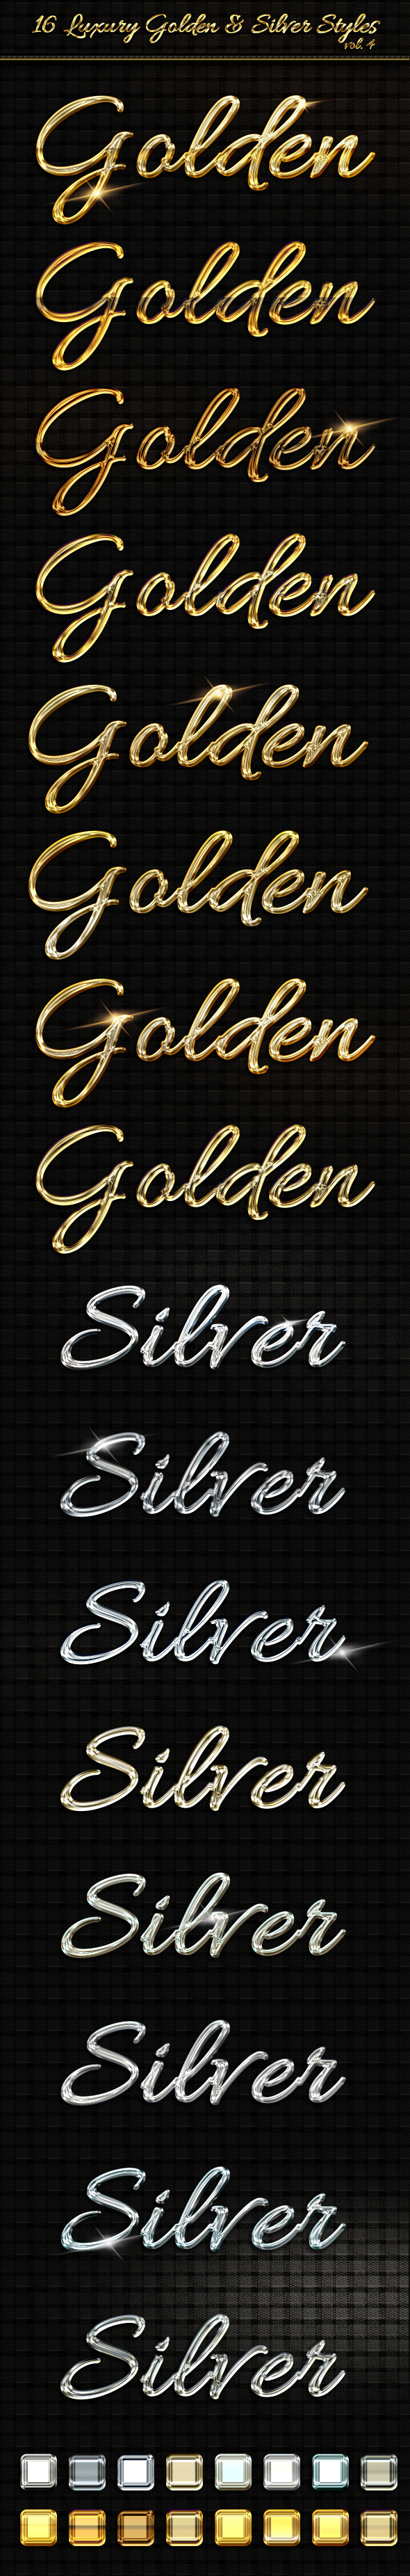 16 Luxury Golden & Silver Text Styles vol4